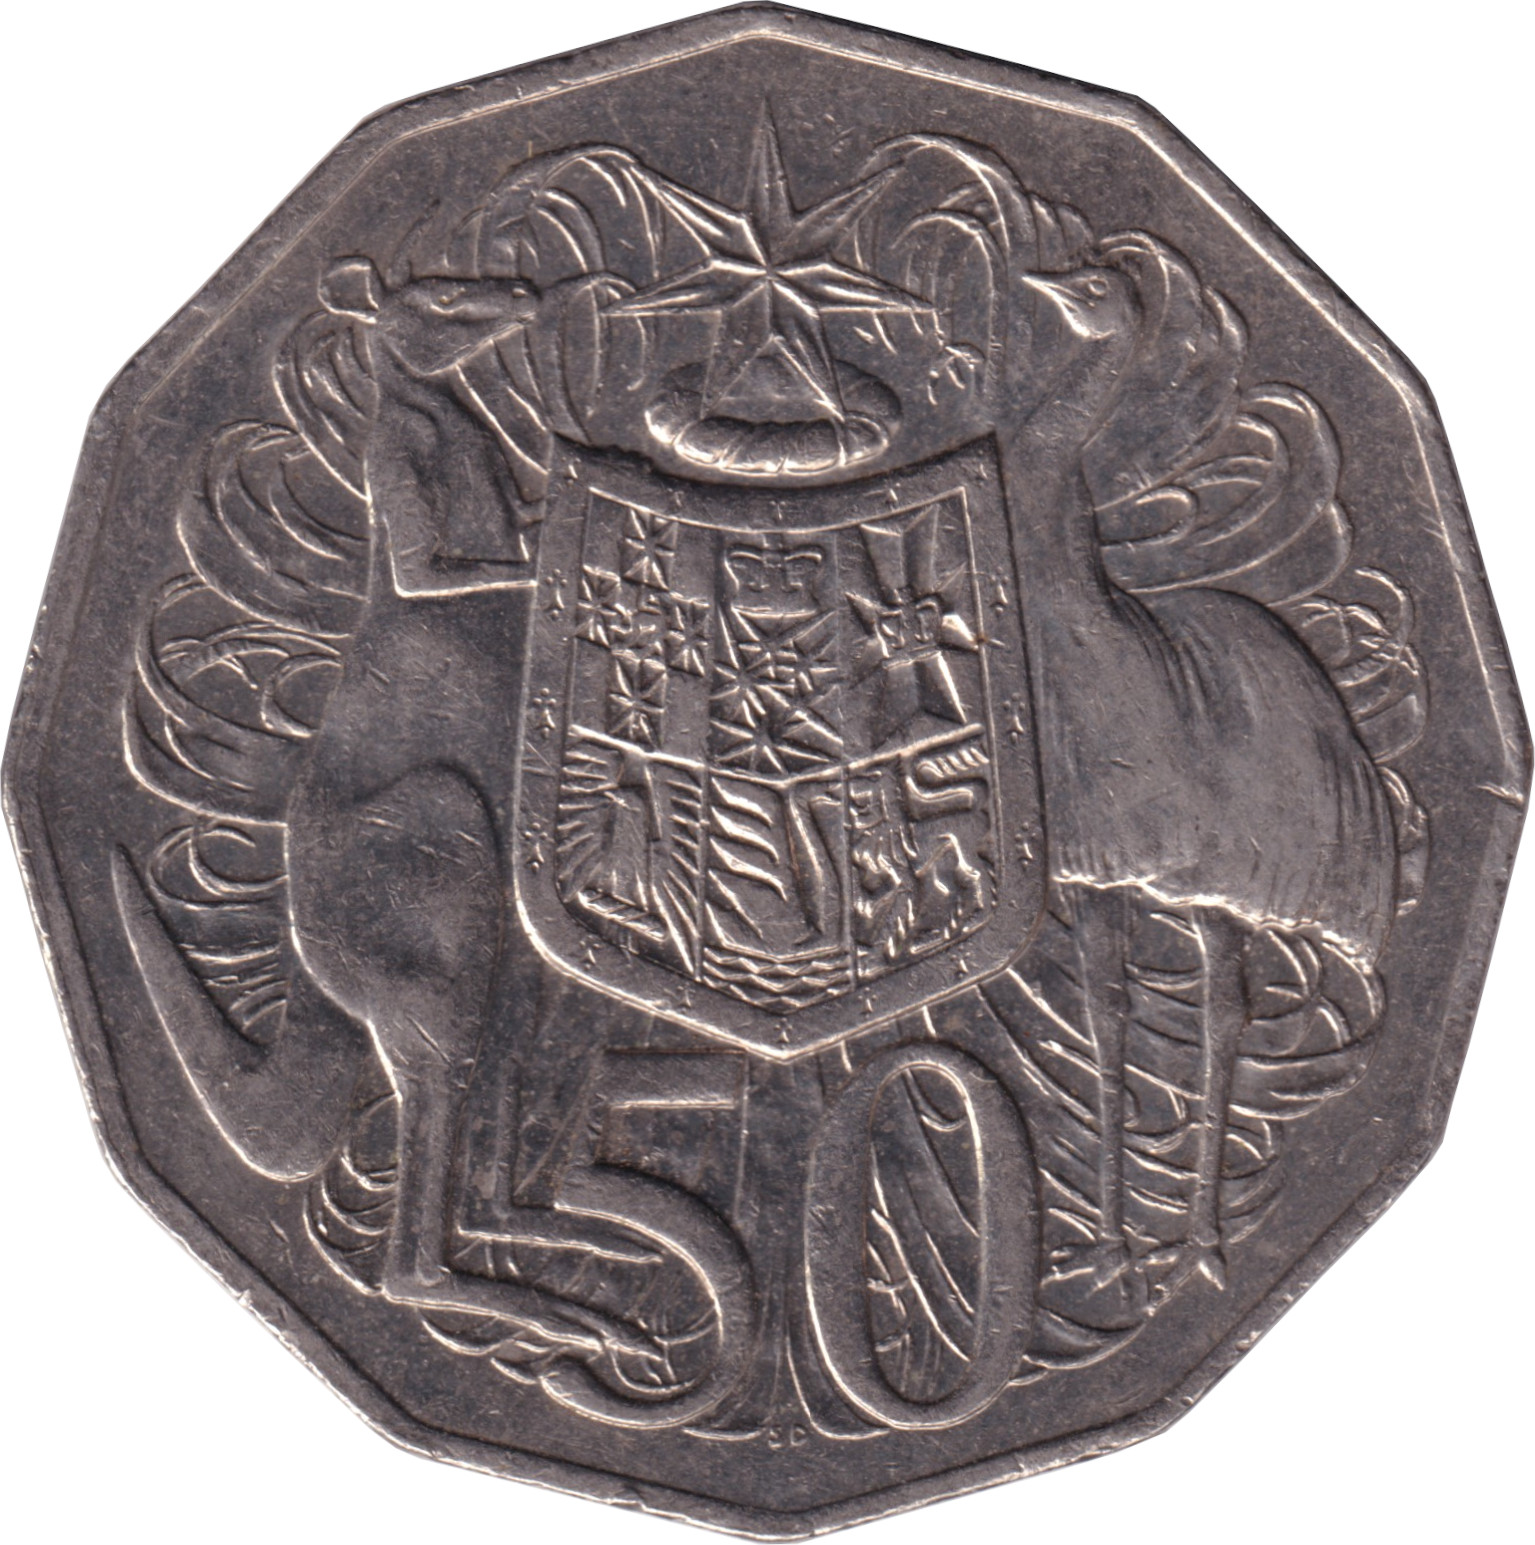 50 cents - Elizabeth II - Mature head